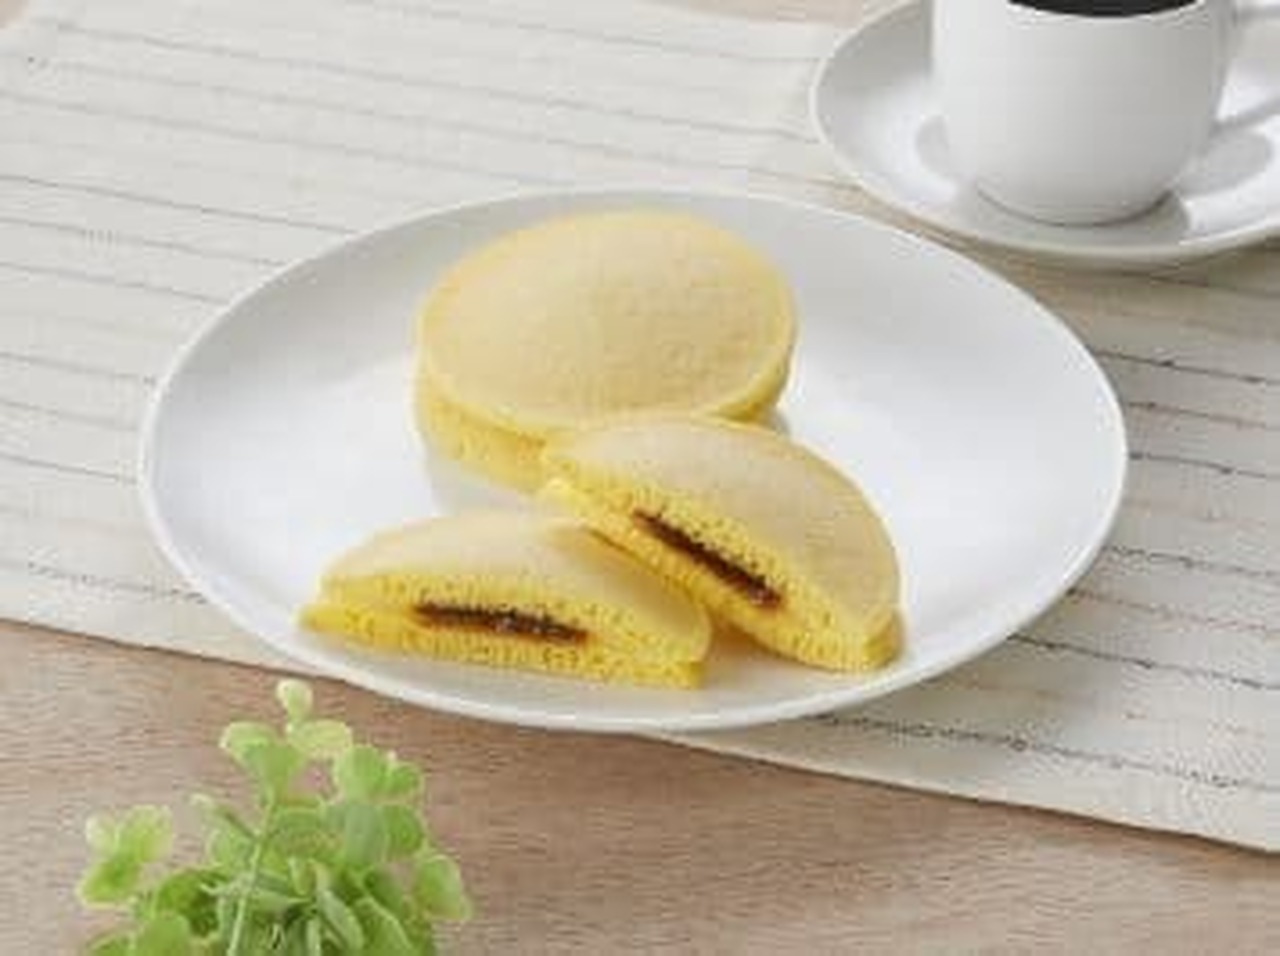 FamilyMart "Pudding-like pancakes (custard & caramel)"